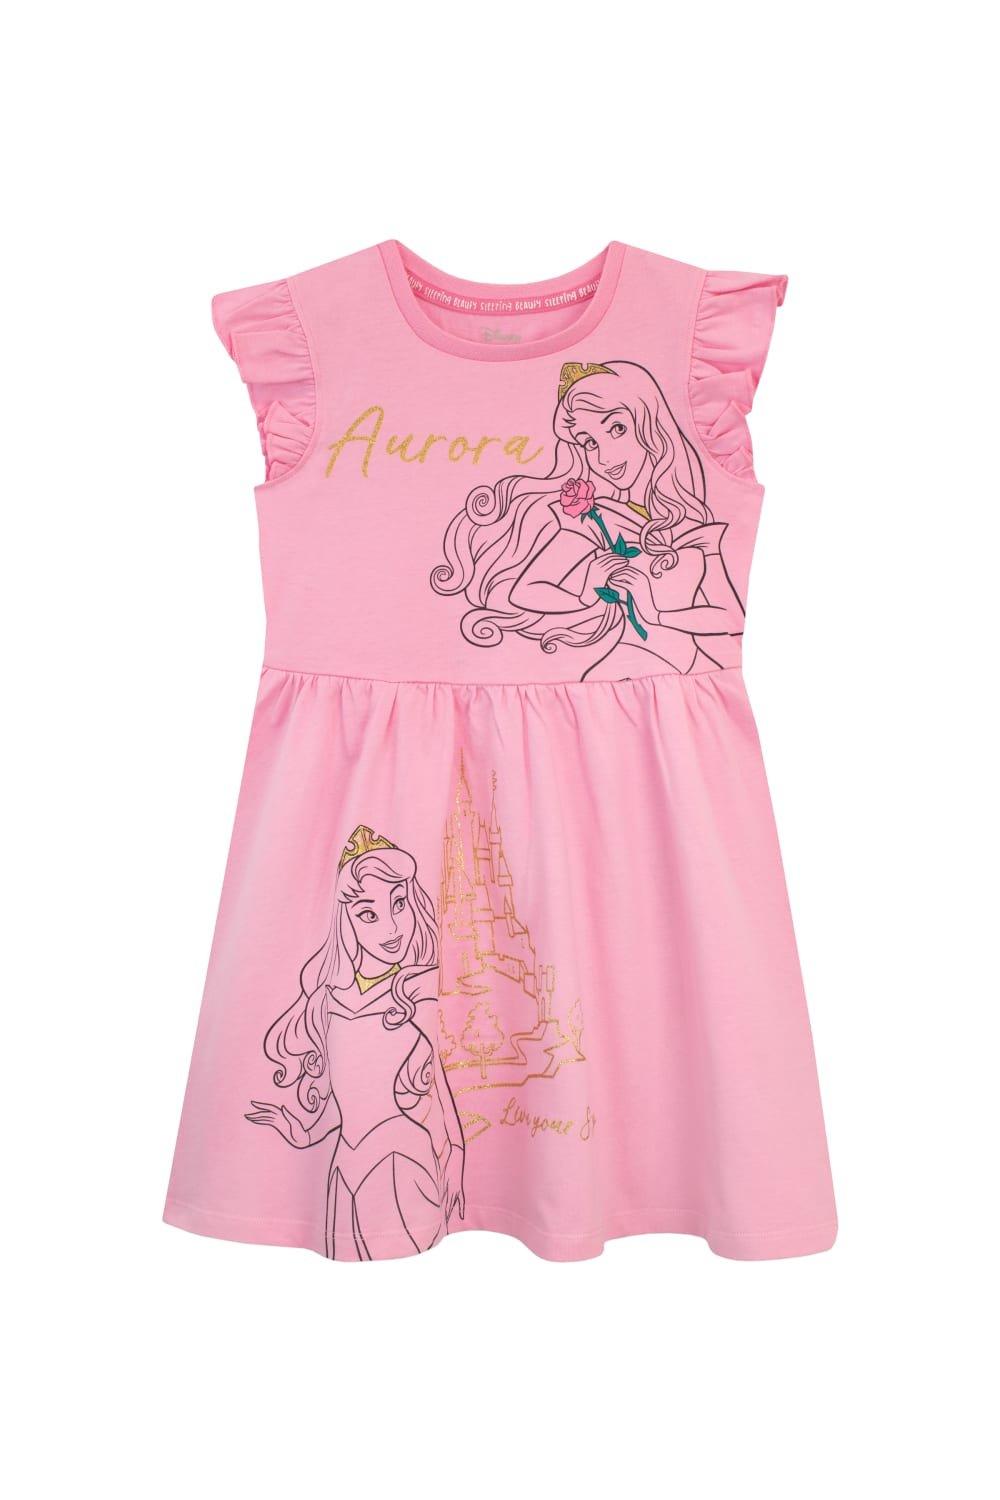 Aurora Sleeping Beauty Dress